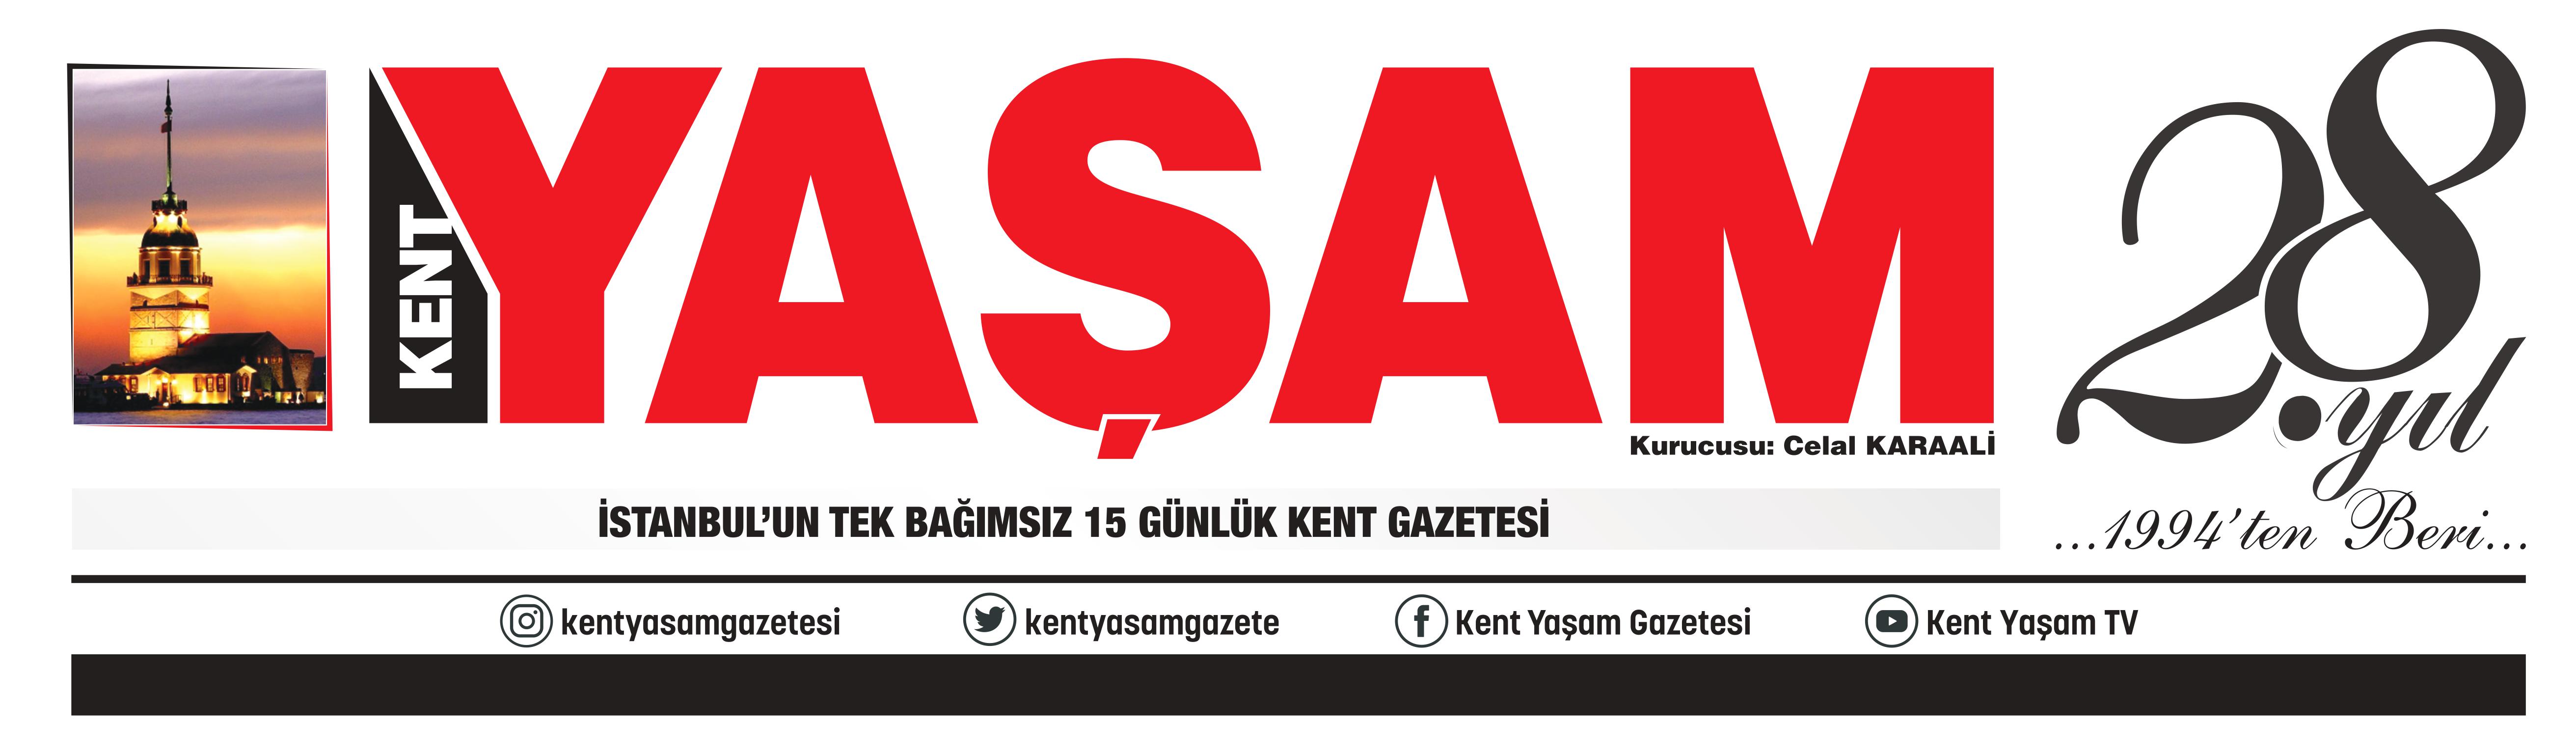 Celal KARAALİ - Yaşam Gazetesi